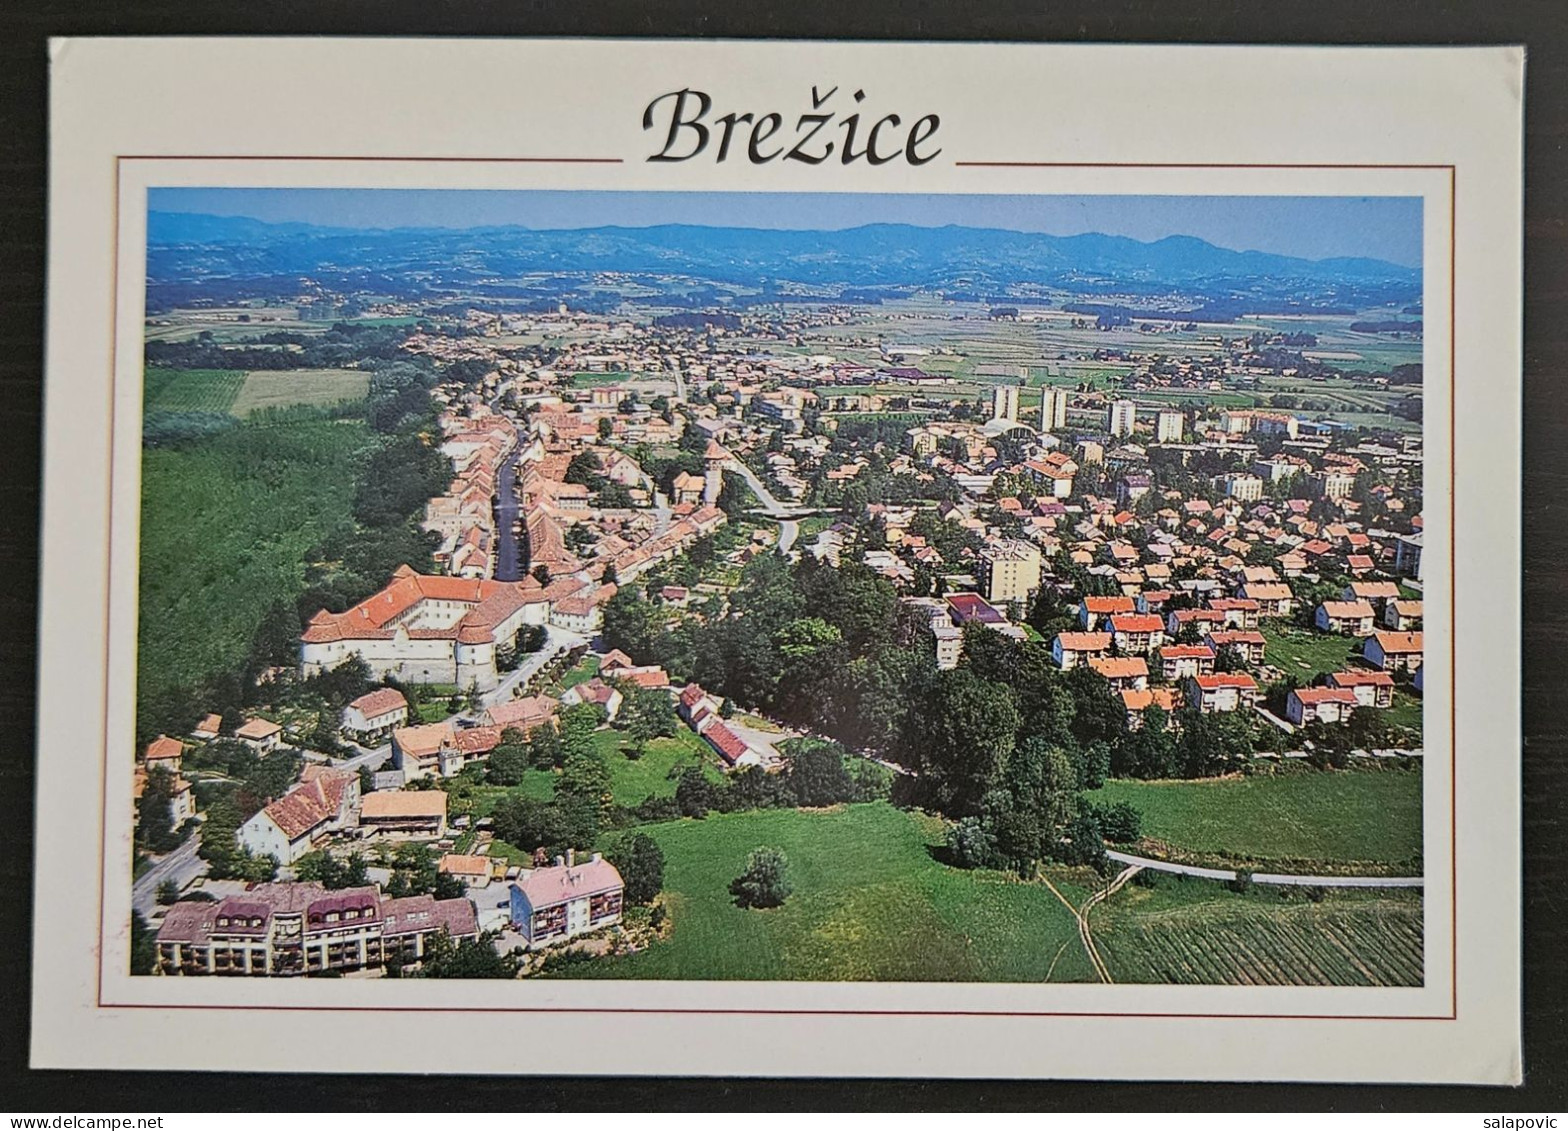 Slovenia, Brezice - Slovenia